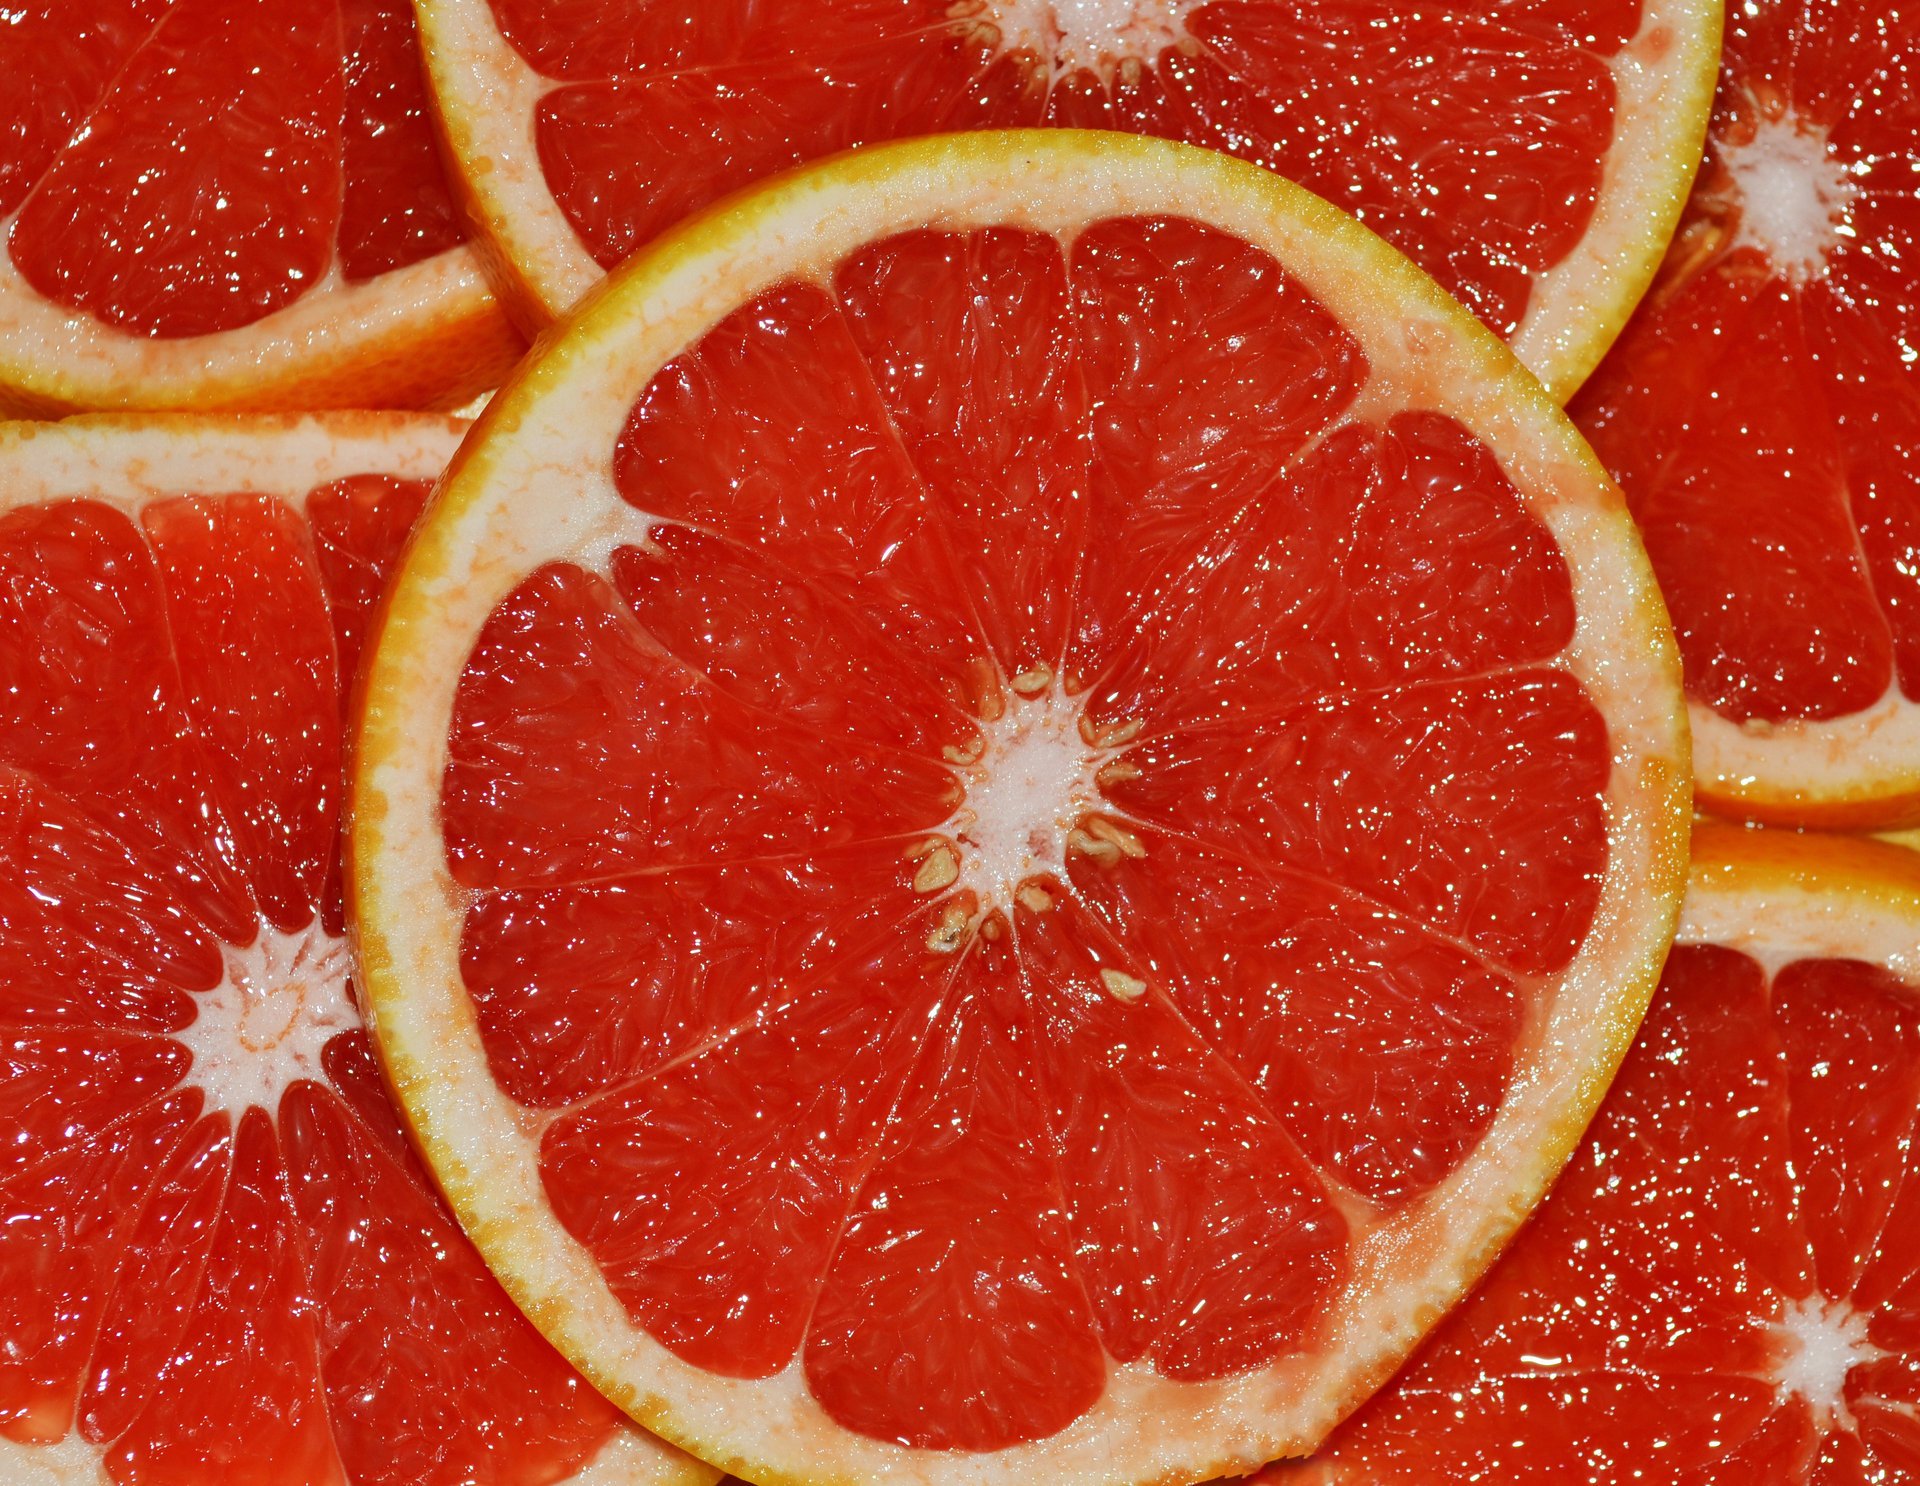 Red juicy citrus. Orange mood